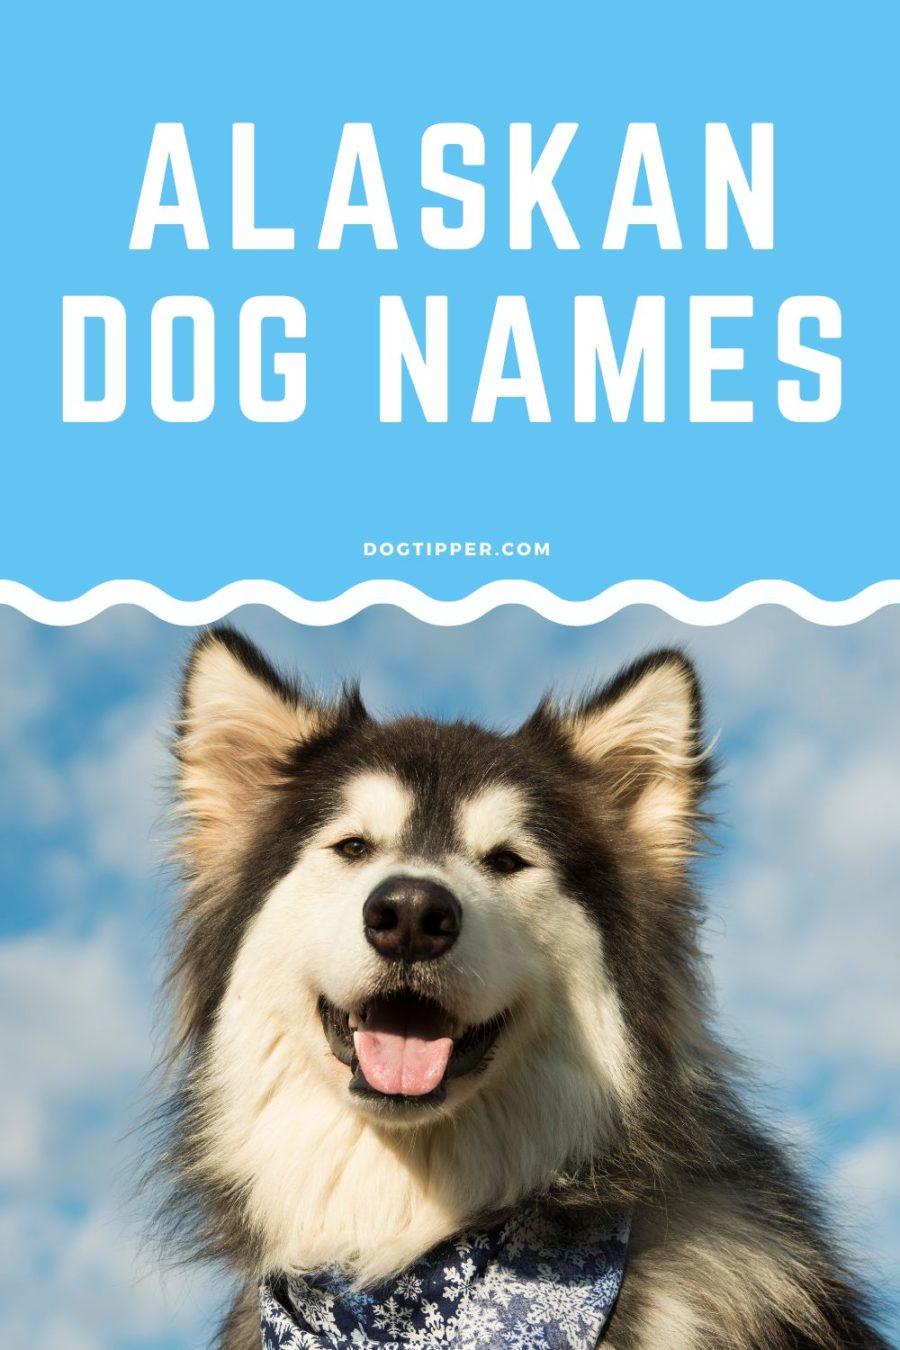 Dog names from Alaska